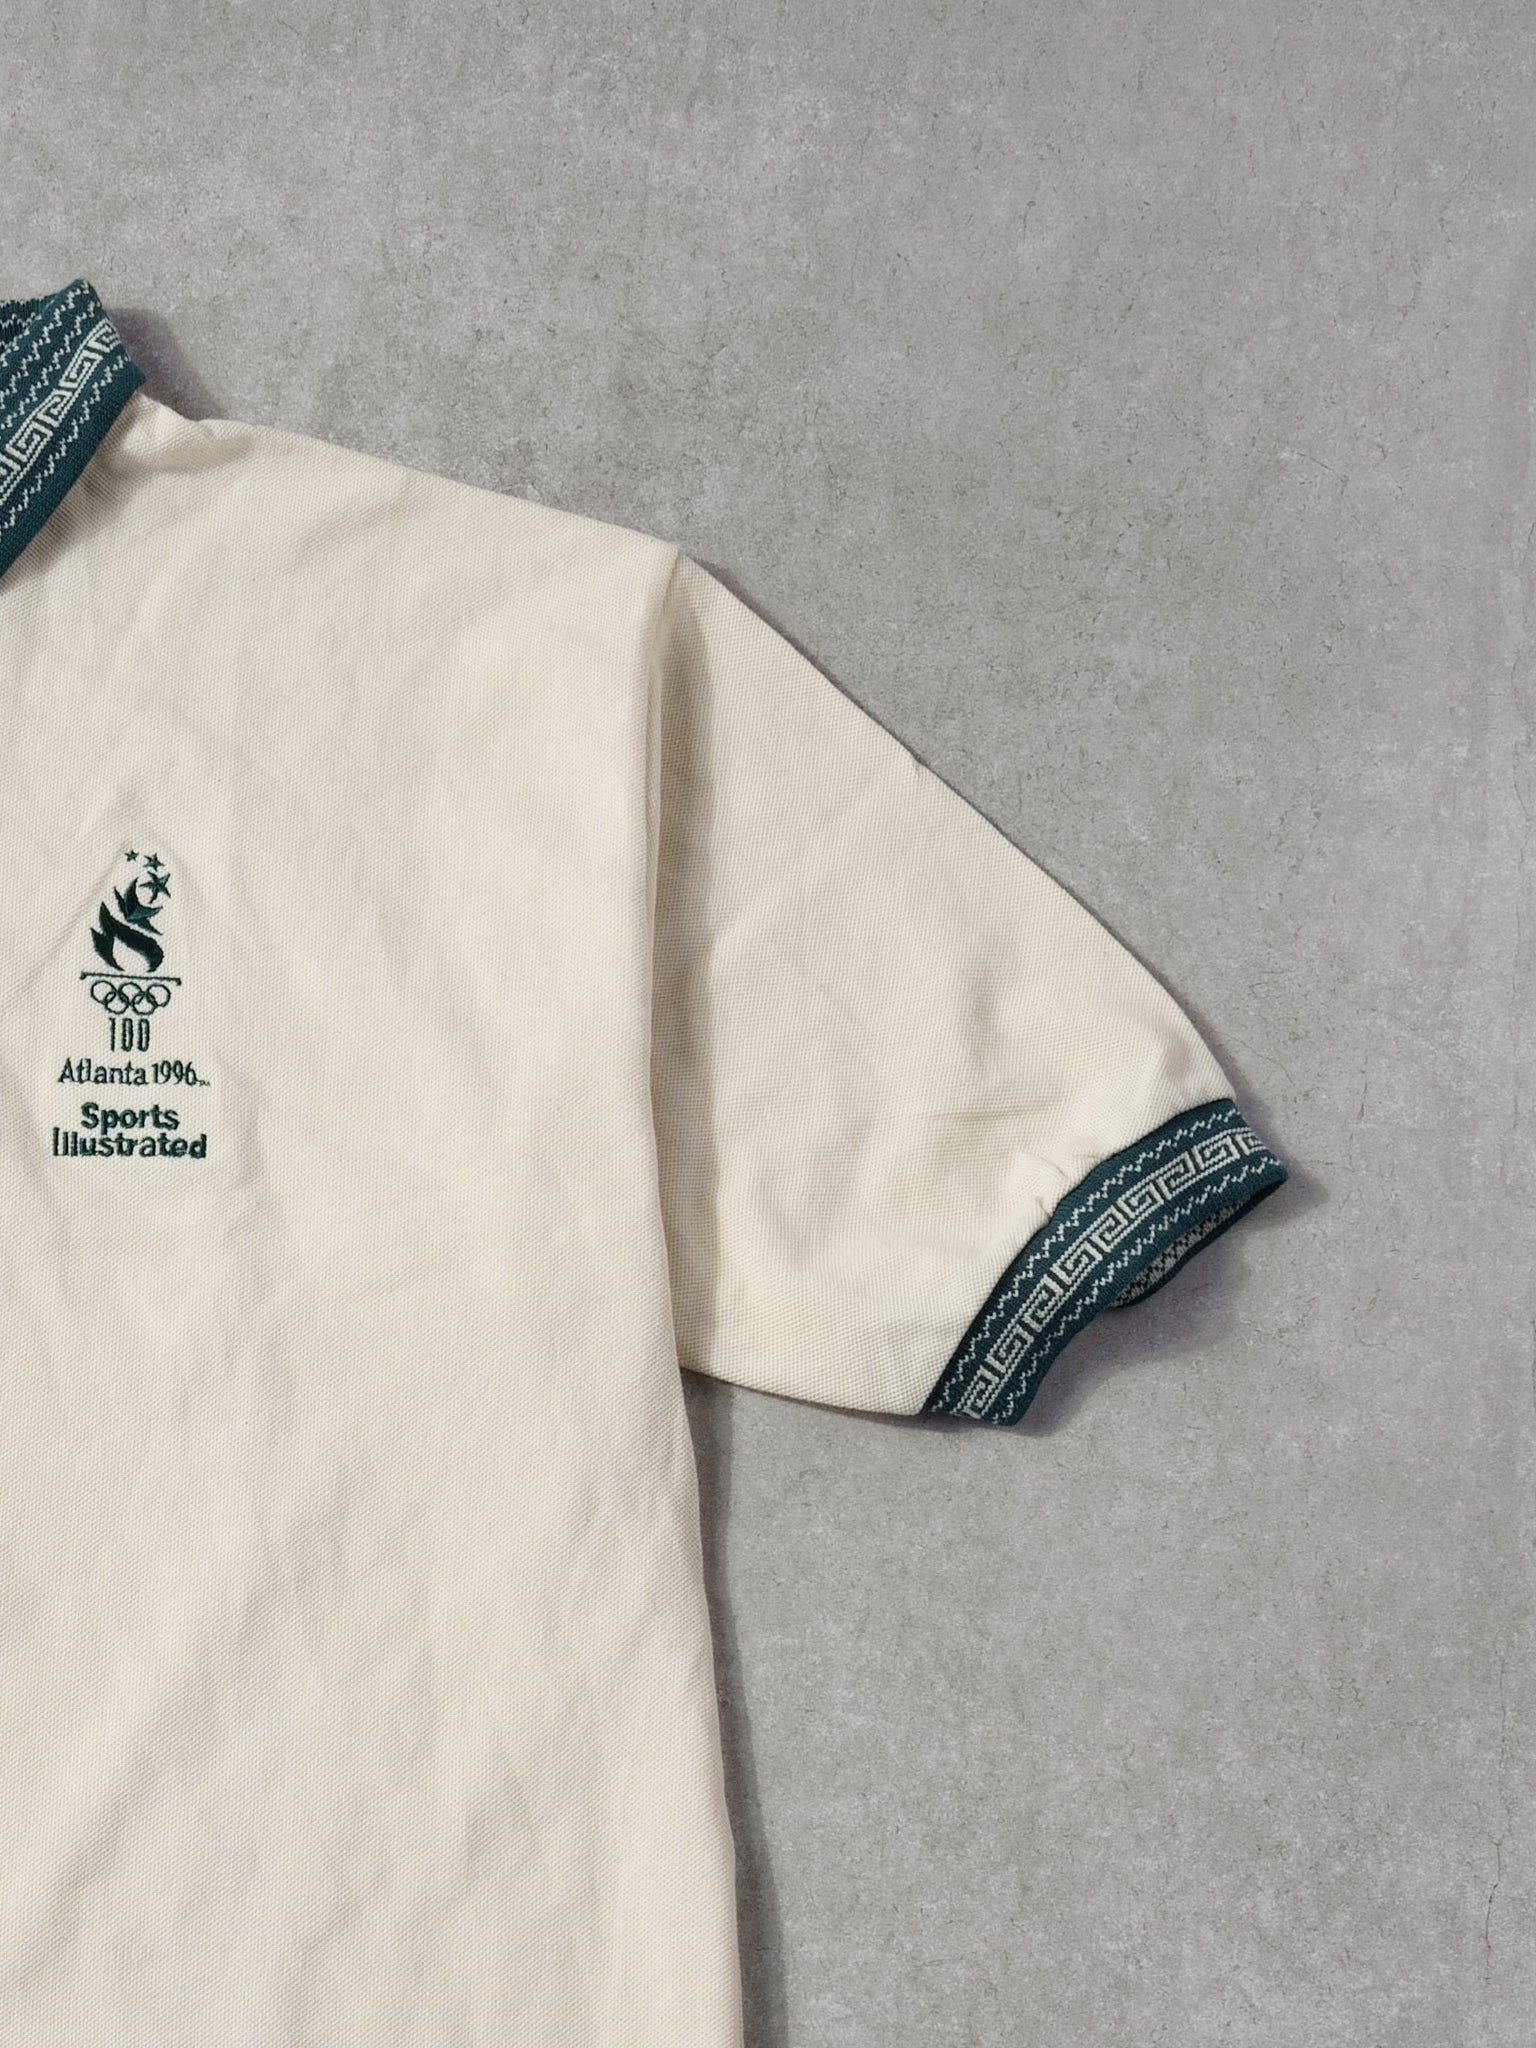 Vintage 96' Cream and Green Atlanta Olympics Sports Illstrated Collared Shirt (M)